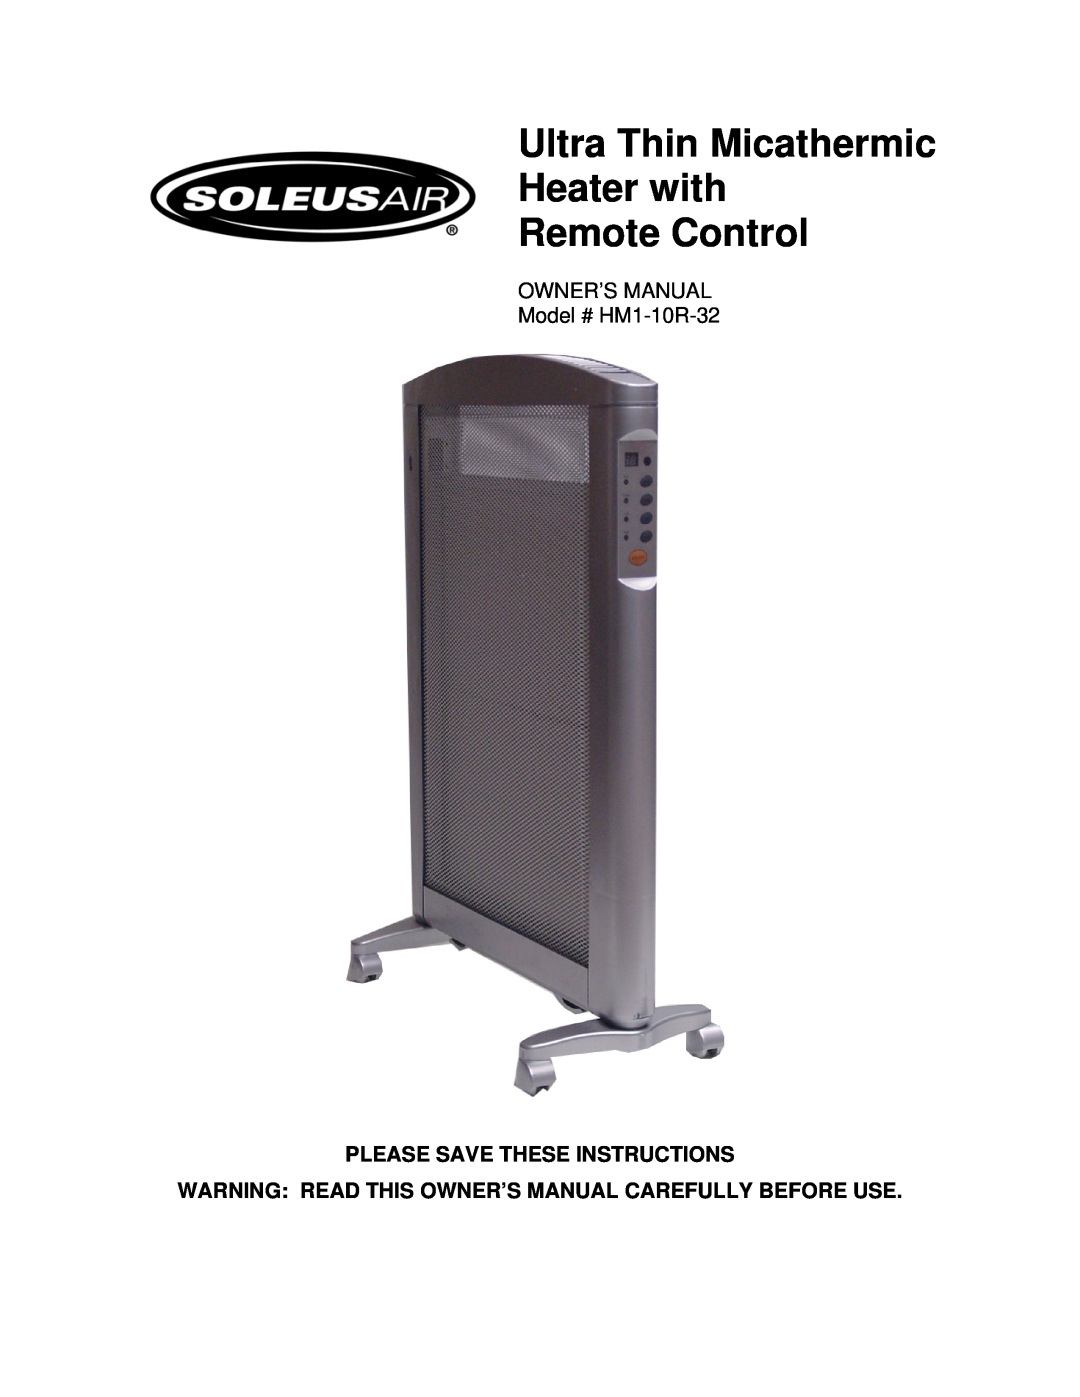 Soleus Air manual Model No. HM1-10R-32, Ultra Thin Micathermic Heater, 3092402 